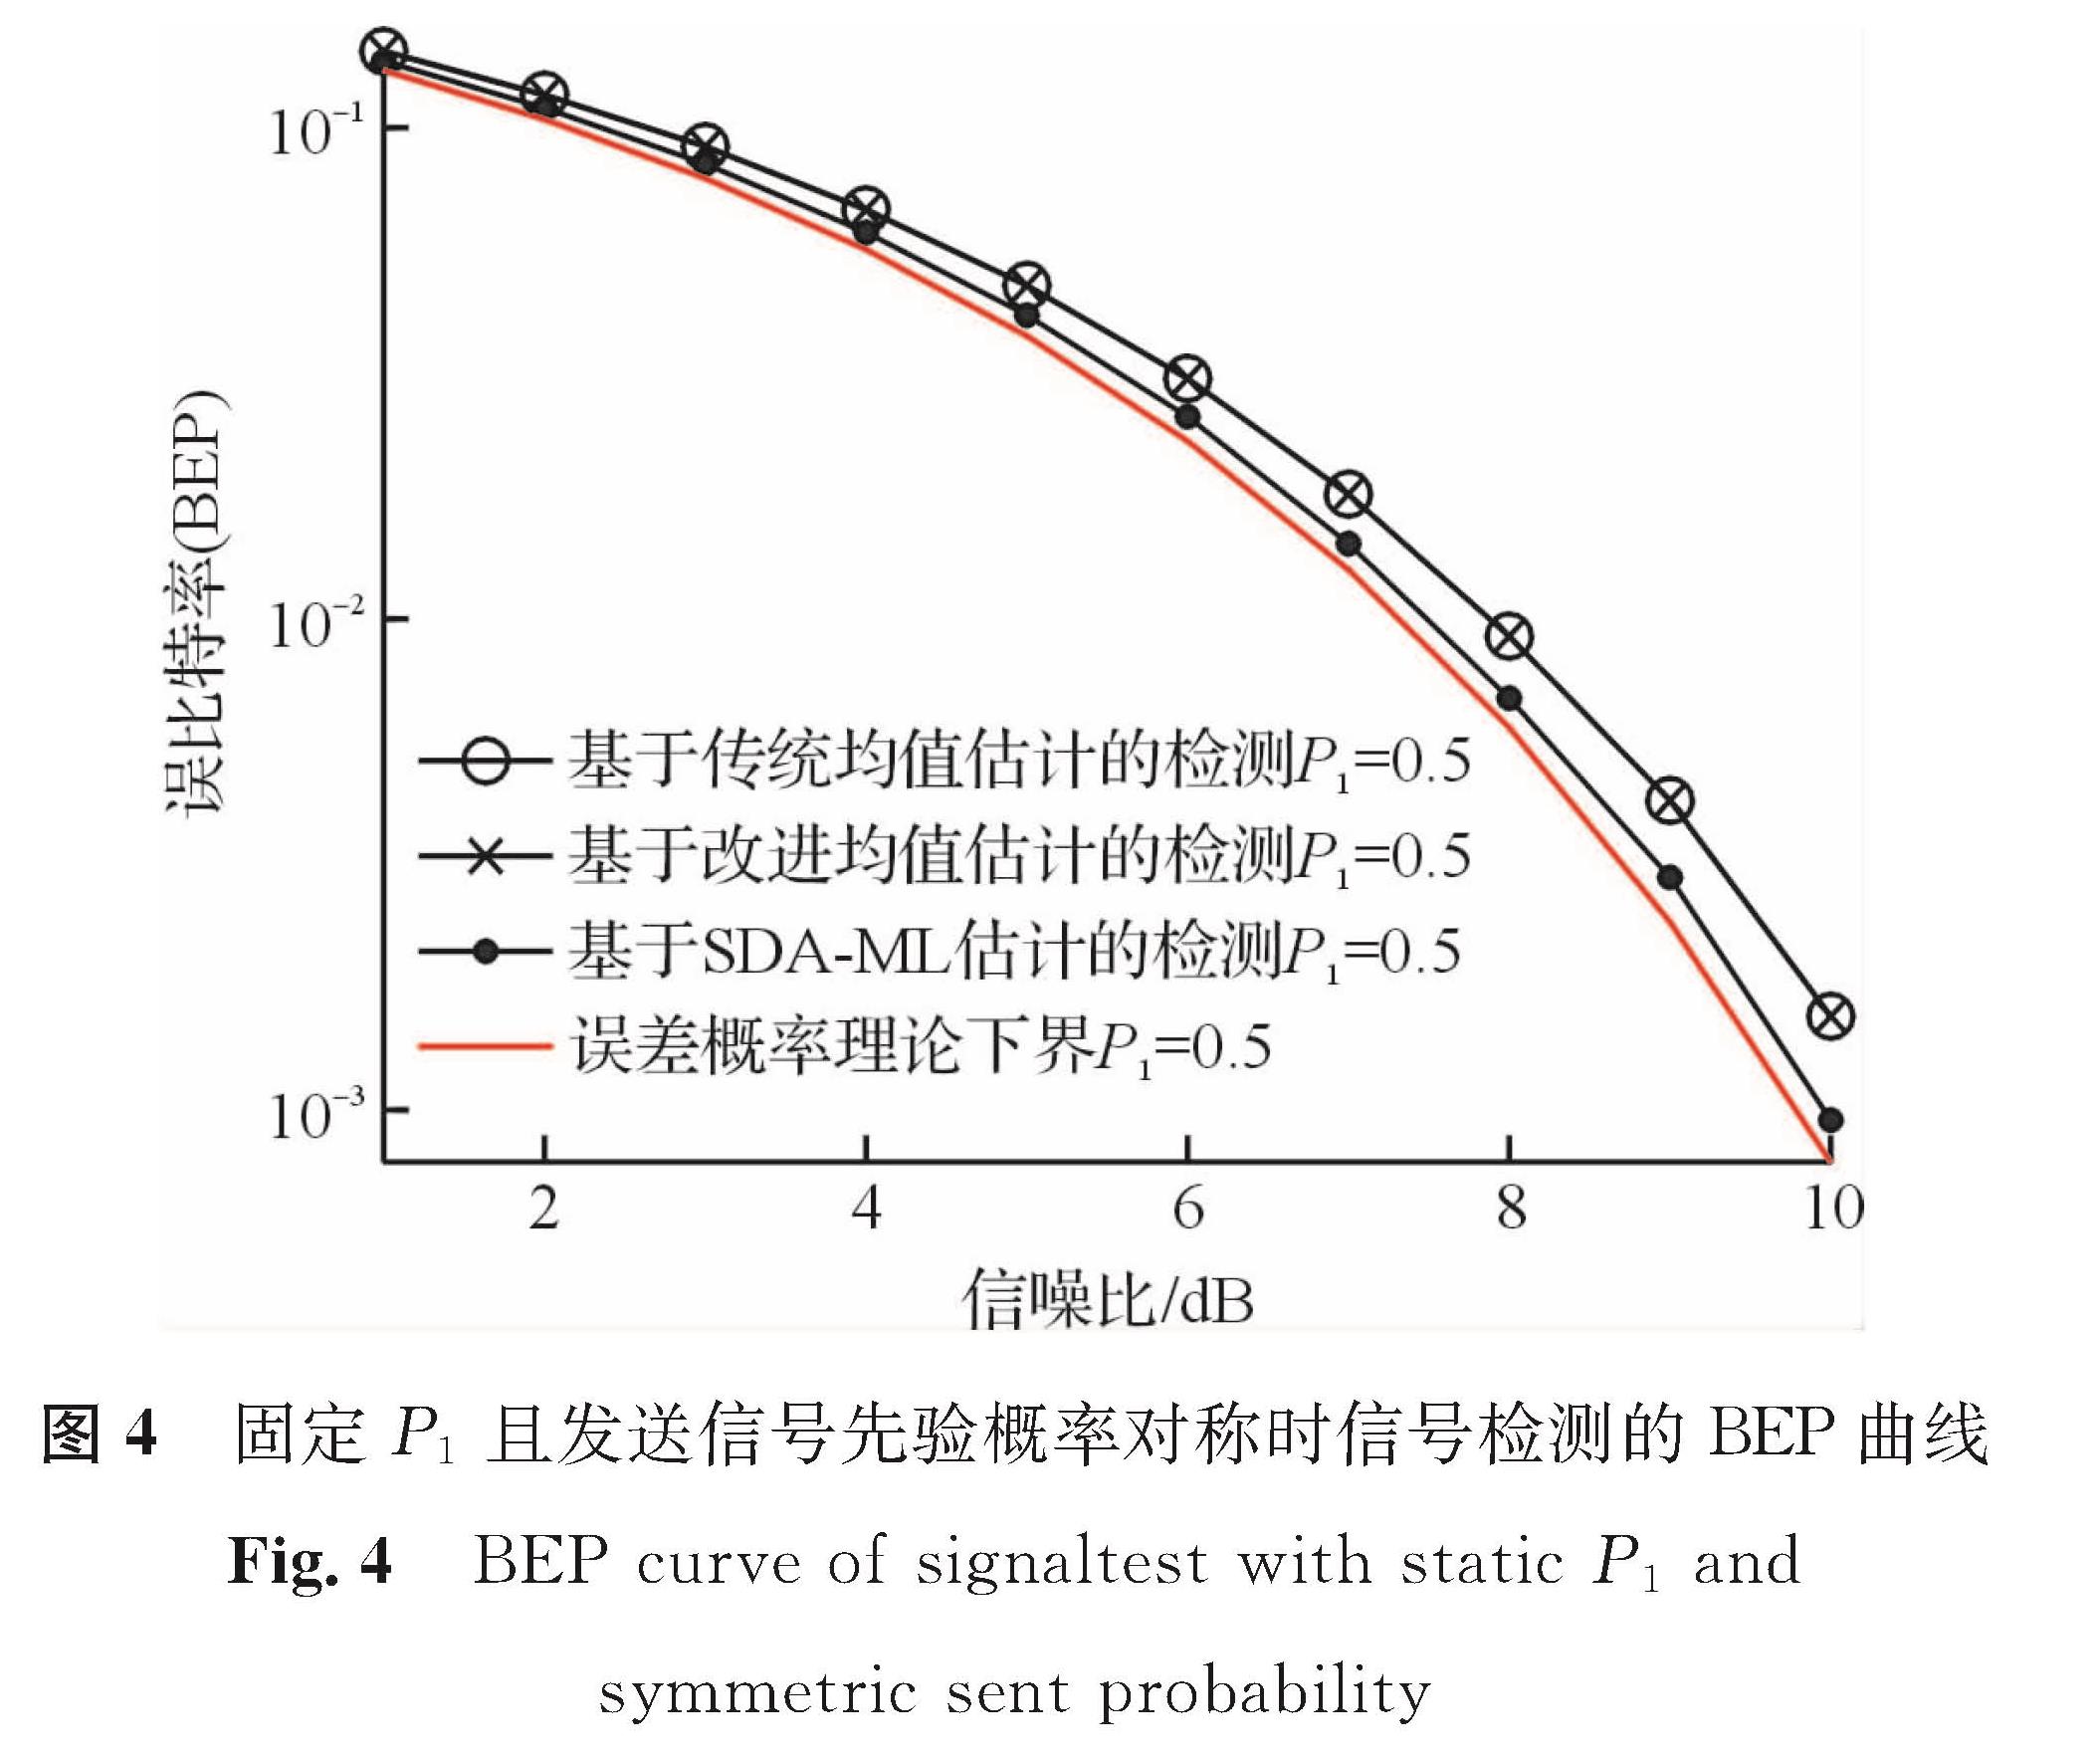 图4 固定P1且发送信号先验概率对称时信号检测的BEP曲线<br/>Fig.4 BEP curve of signaltest with static P1 and symmetric sent probability